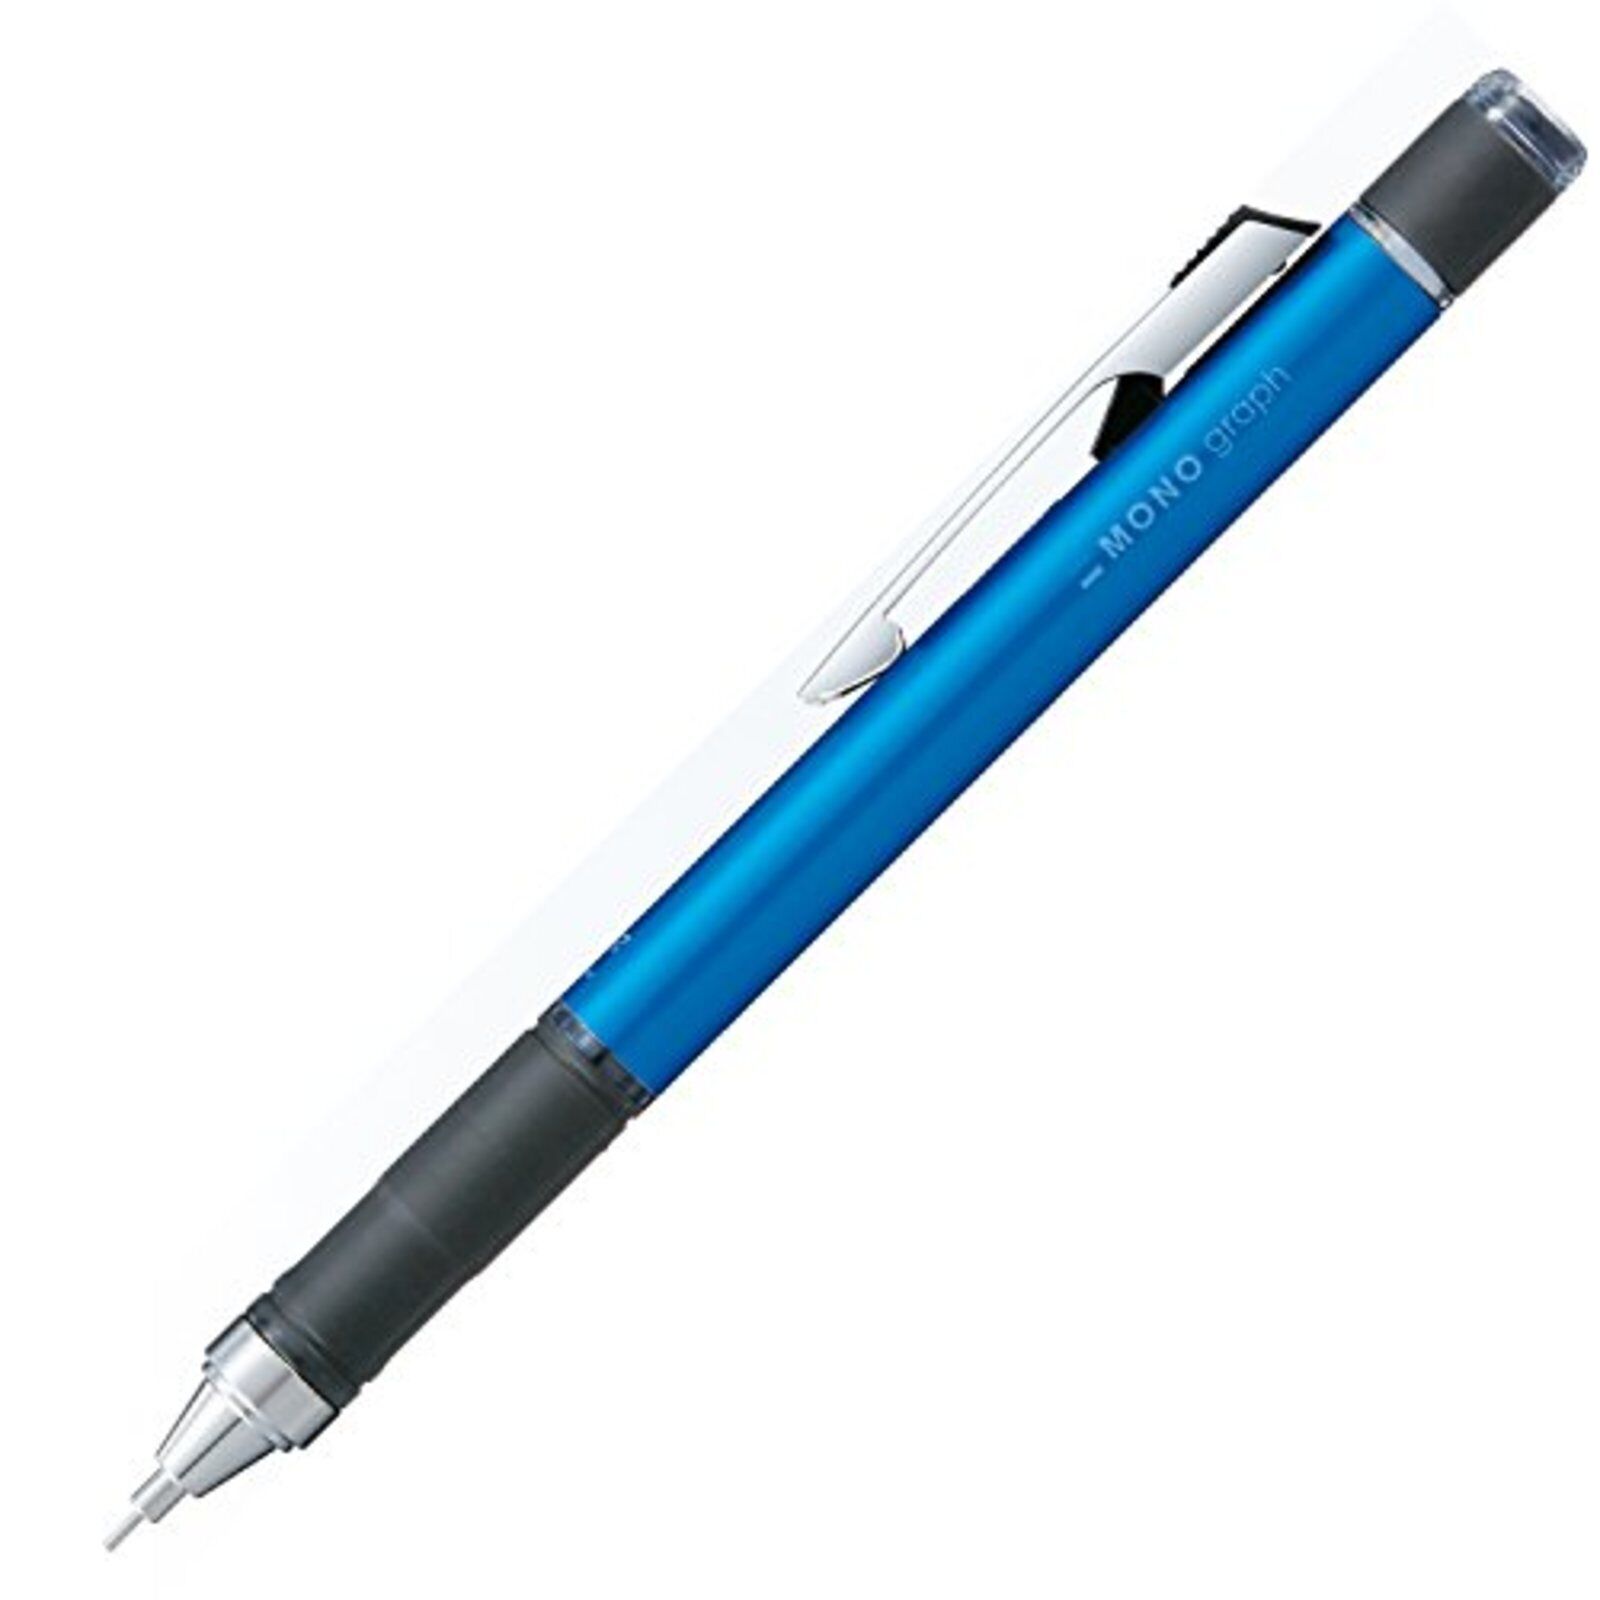 Tombow Pencil sharp pen MONO monograph rubber grip light blue DPA-141B F/S Track